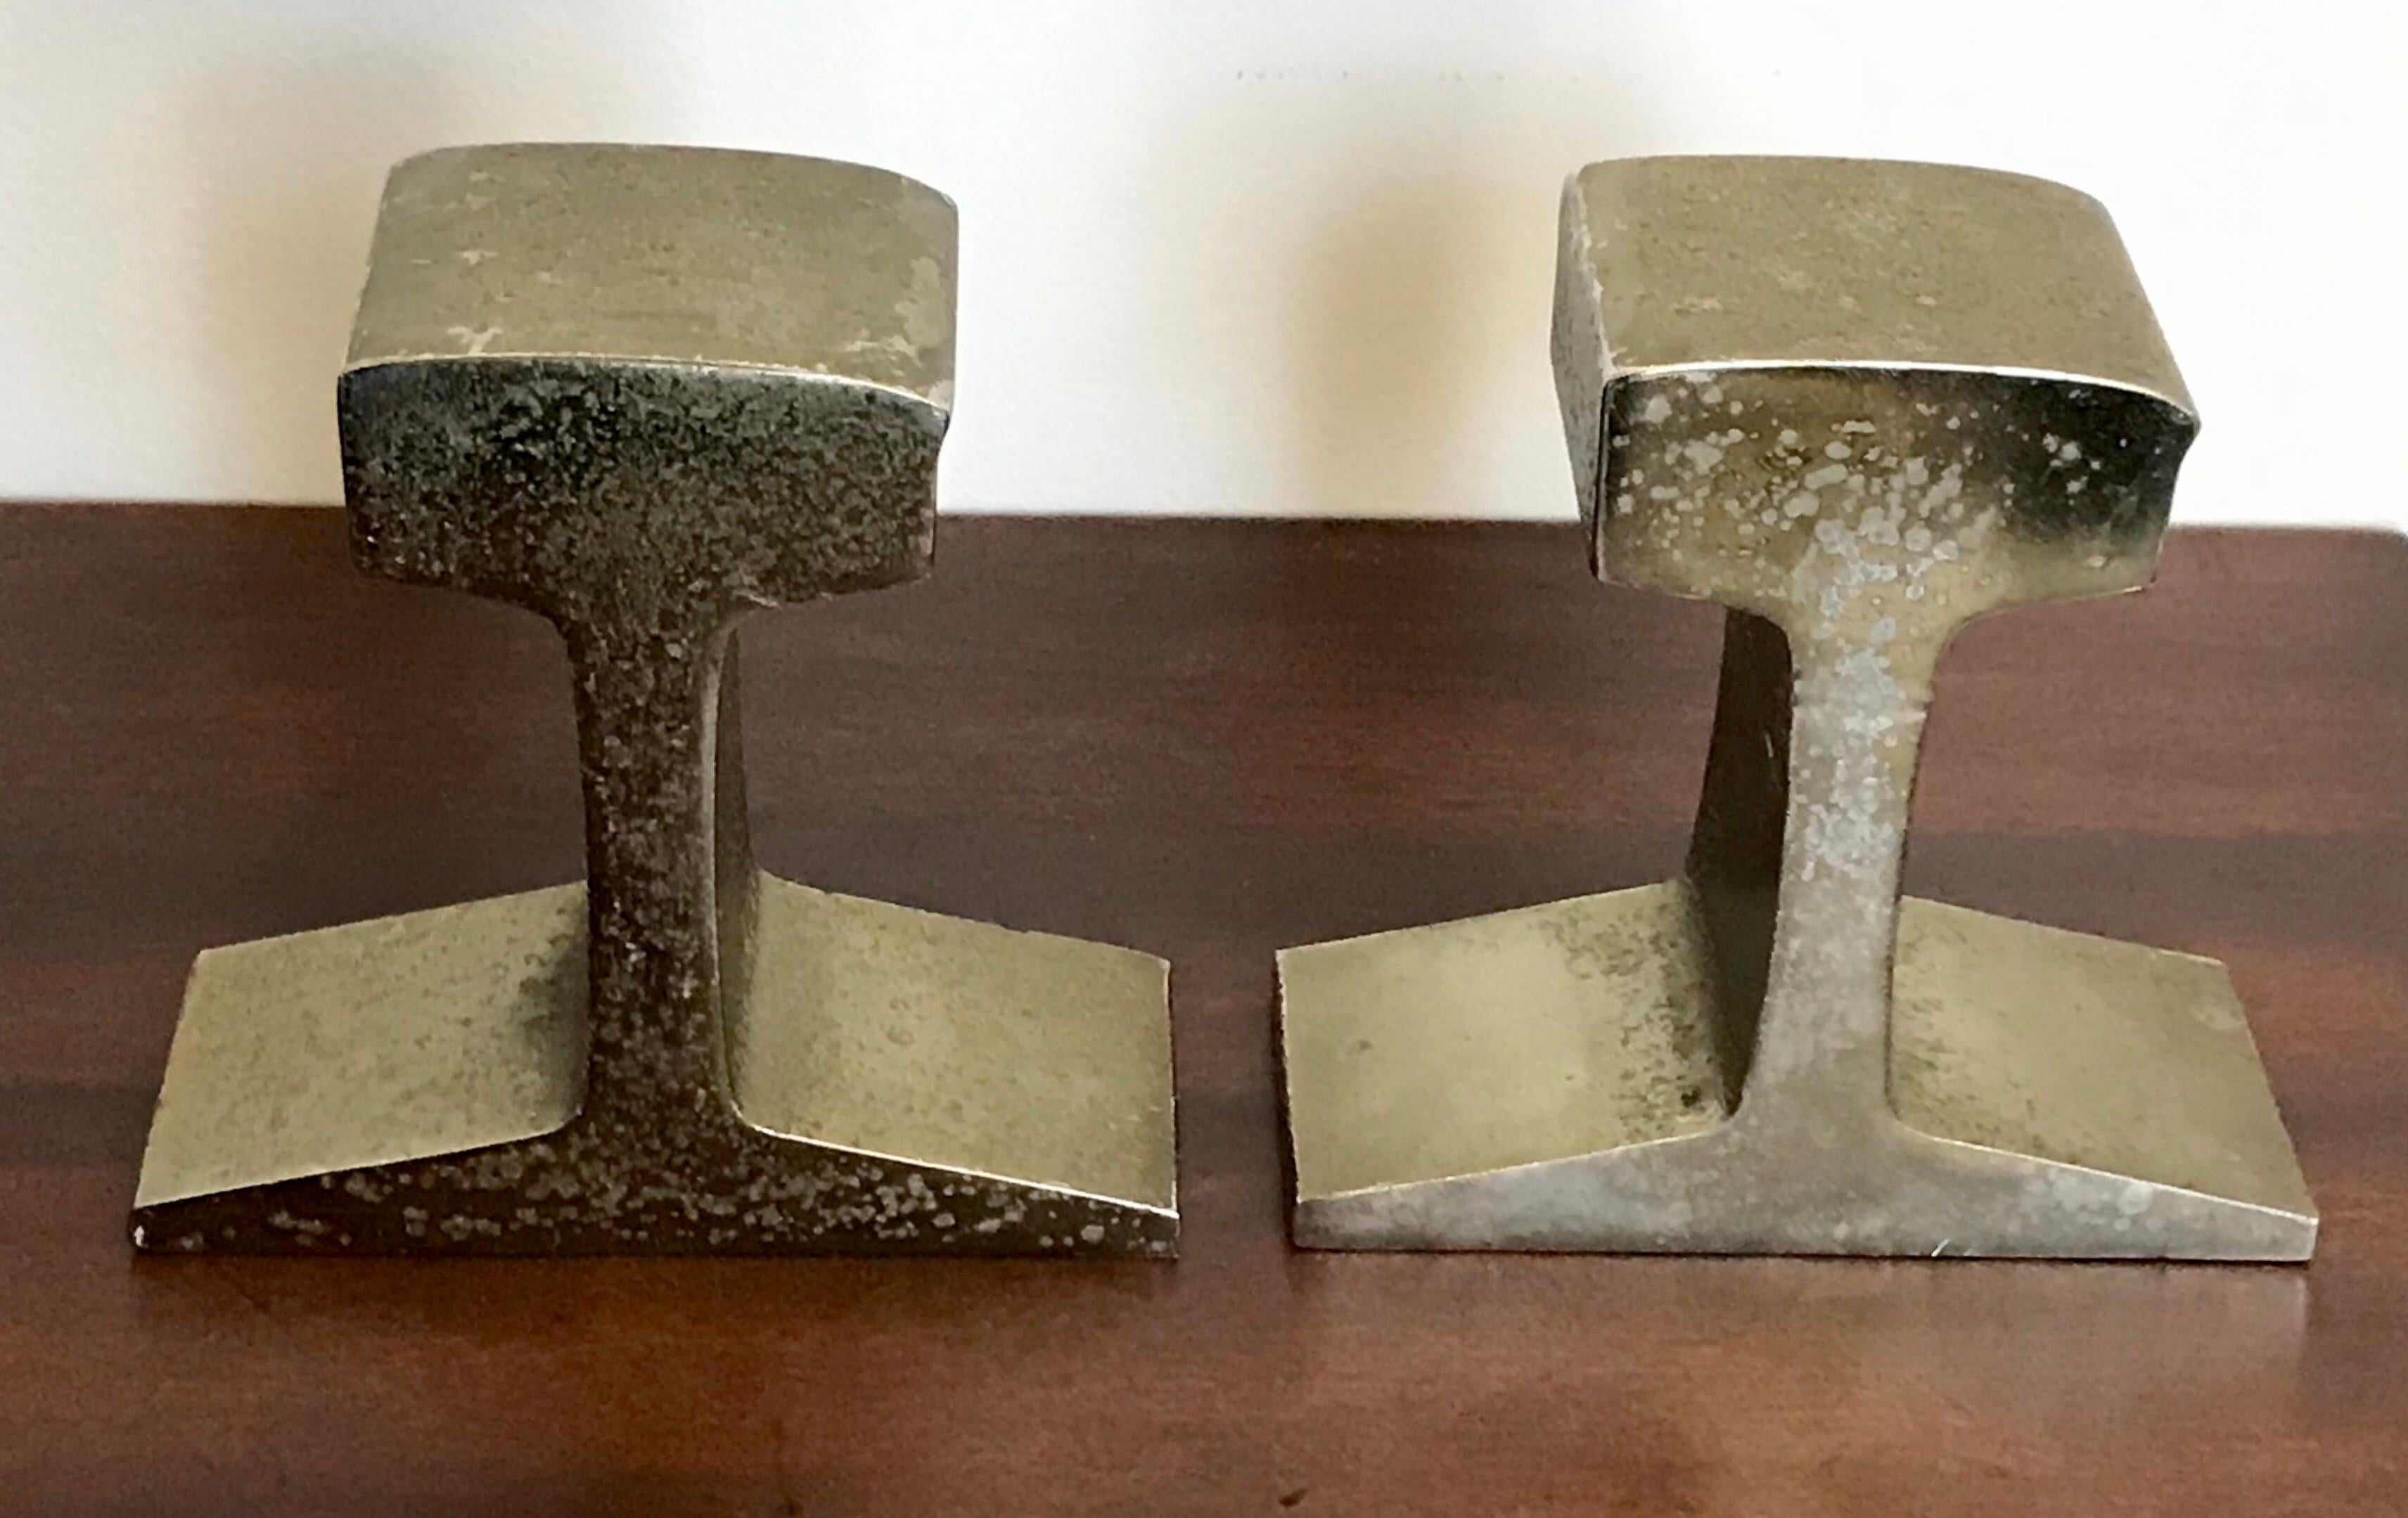 Brutalist cast metal bronze color bookends in the shape of railroad ties, Ben Seibel style, 1970s.